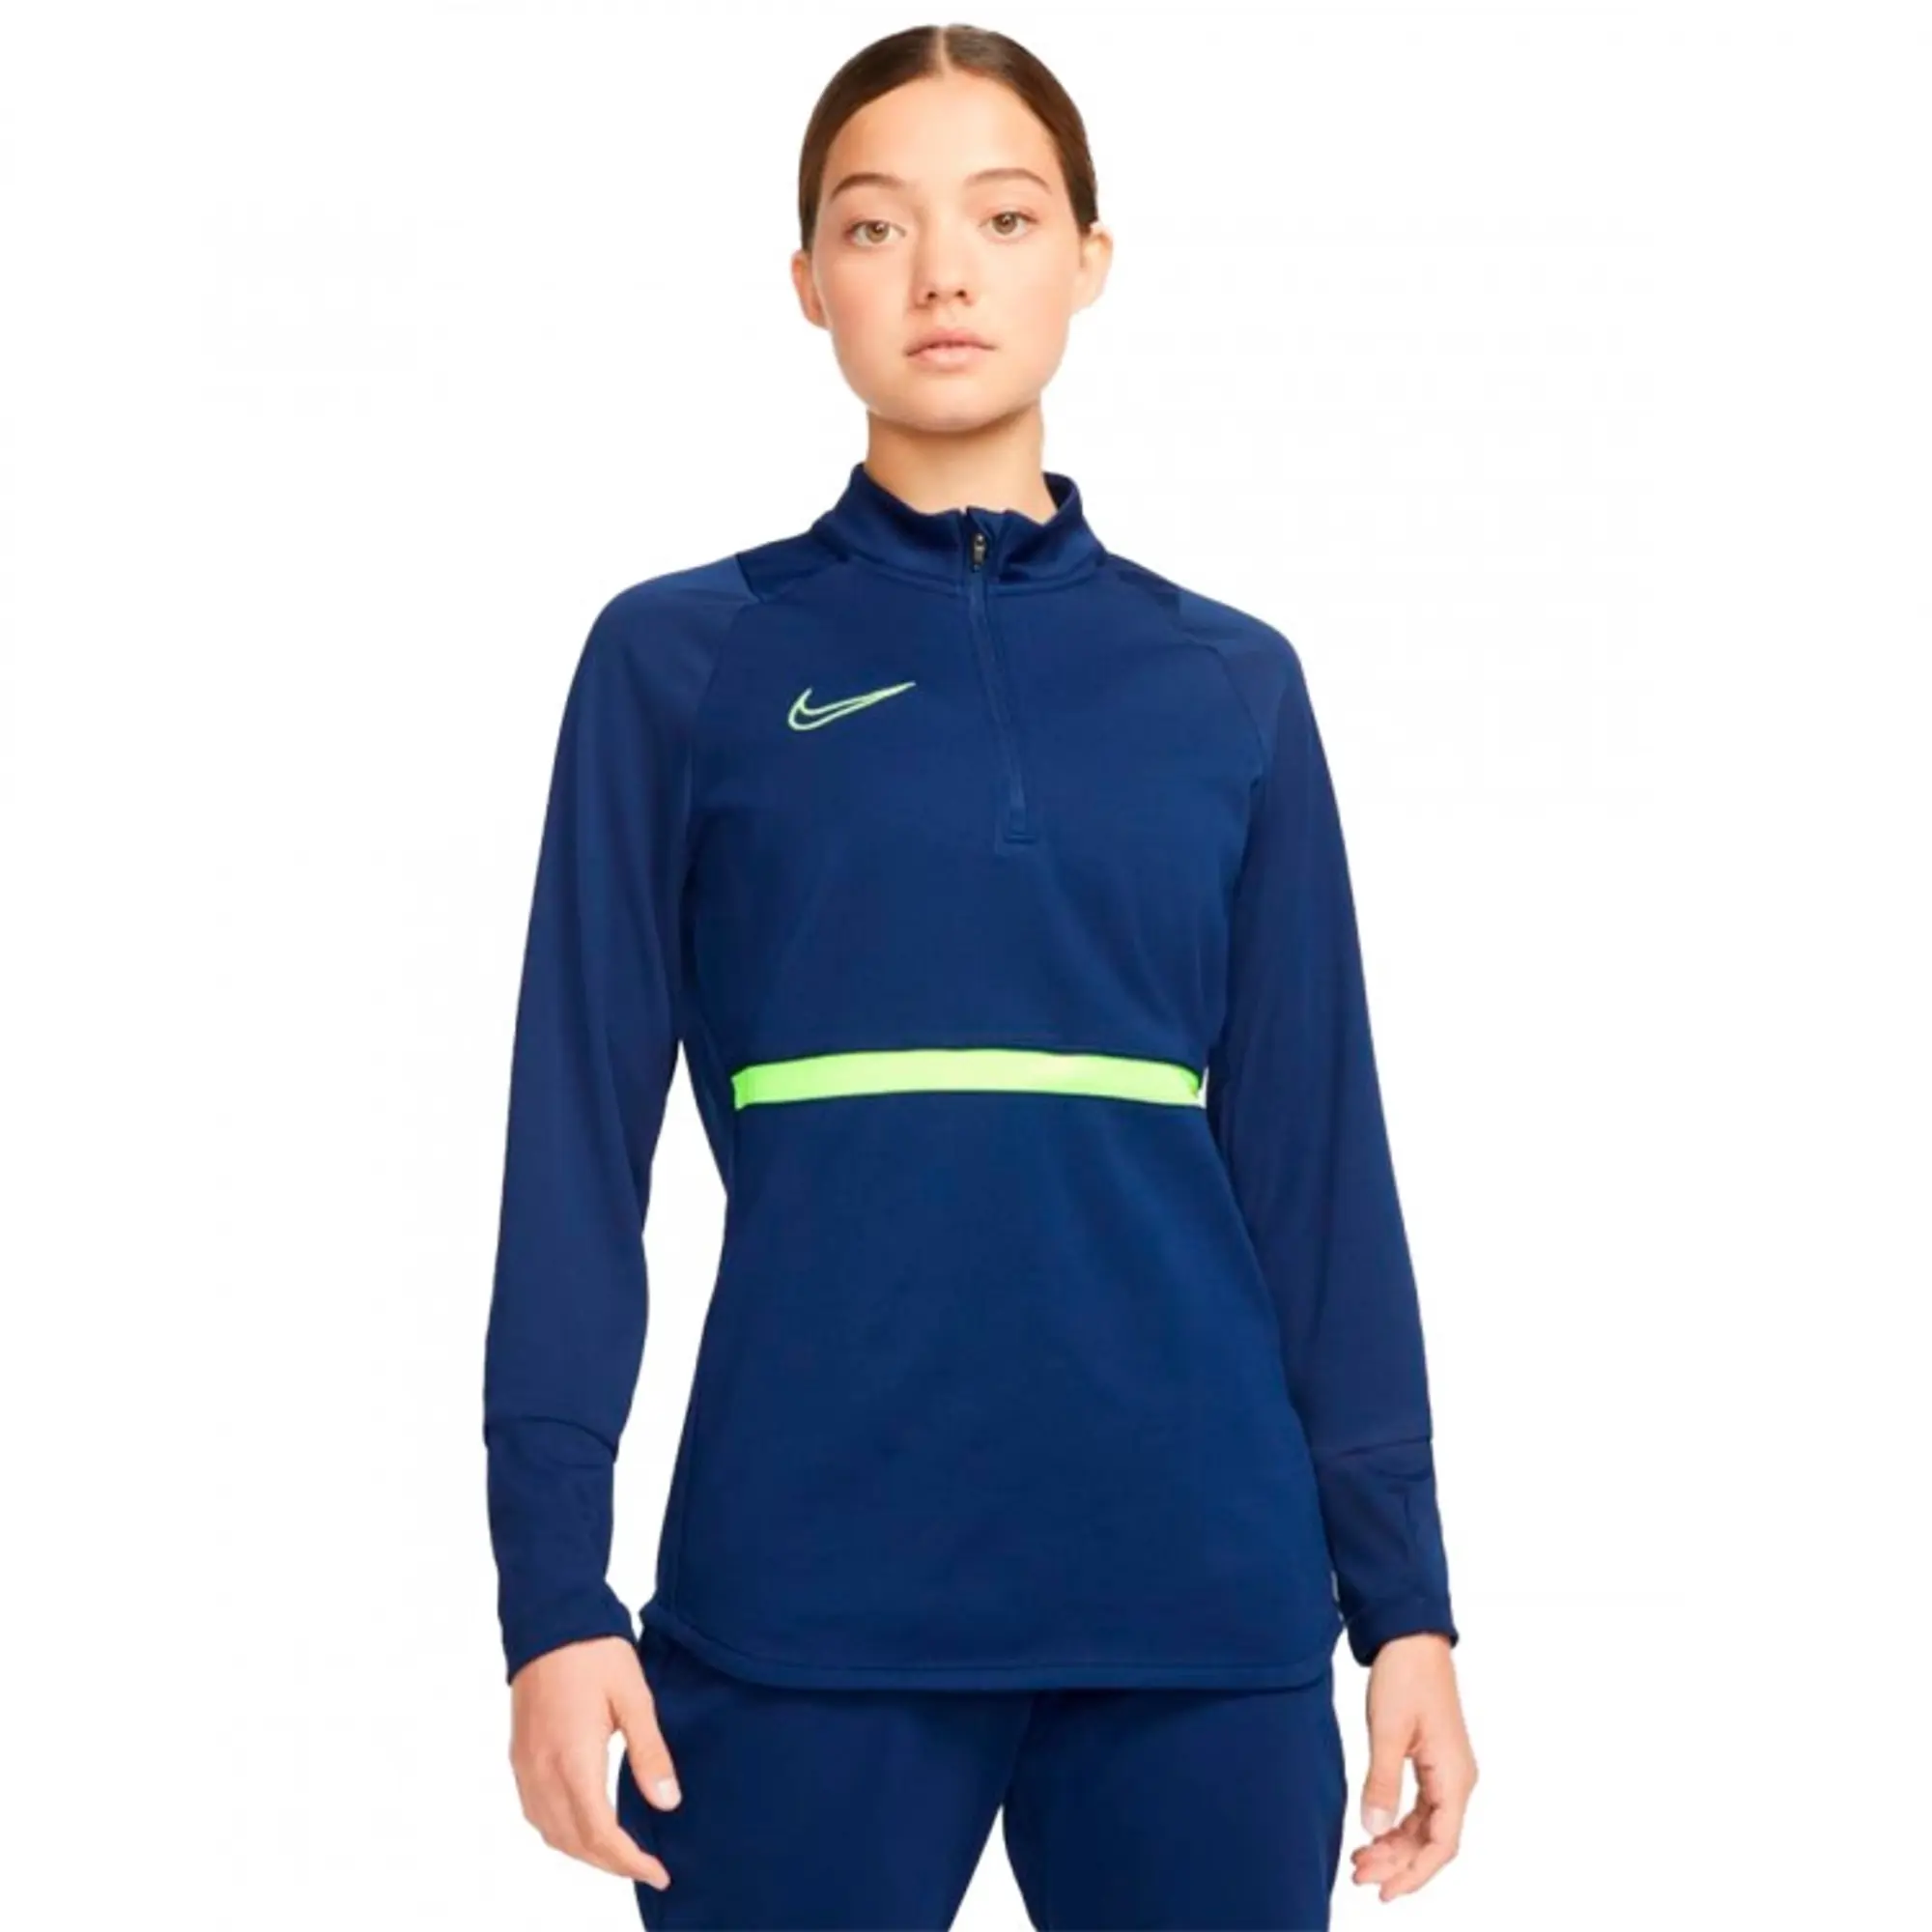 Nike Women's Layer Top - Blue